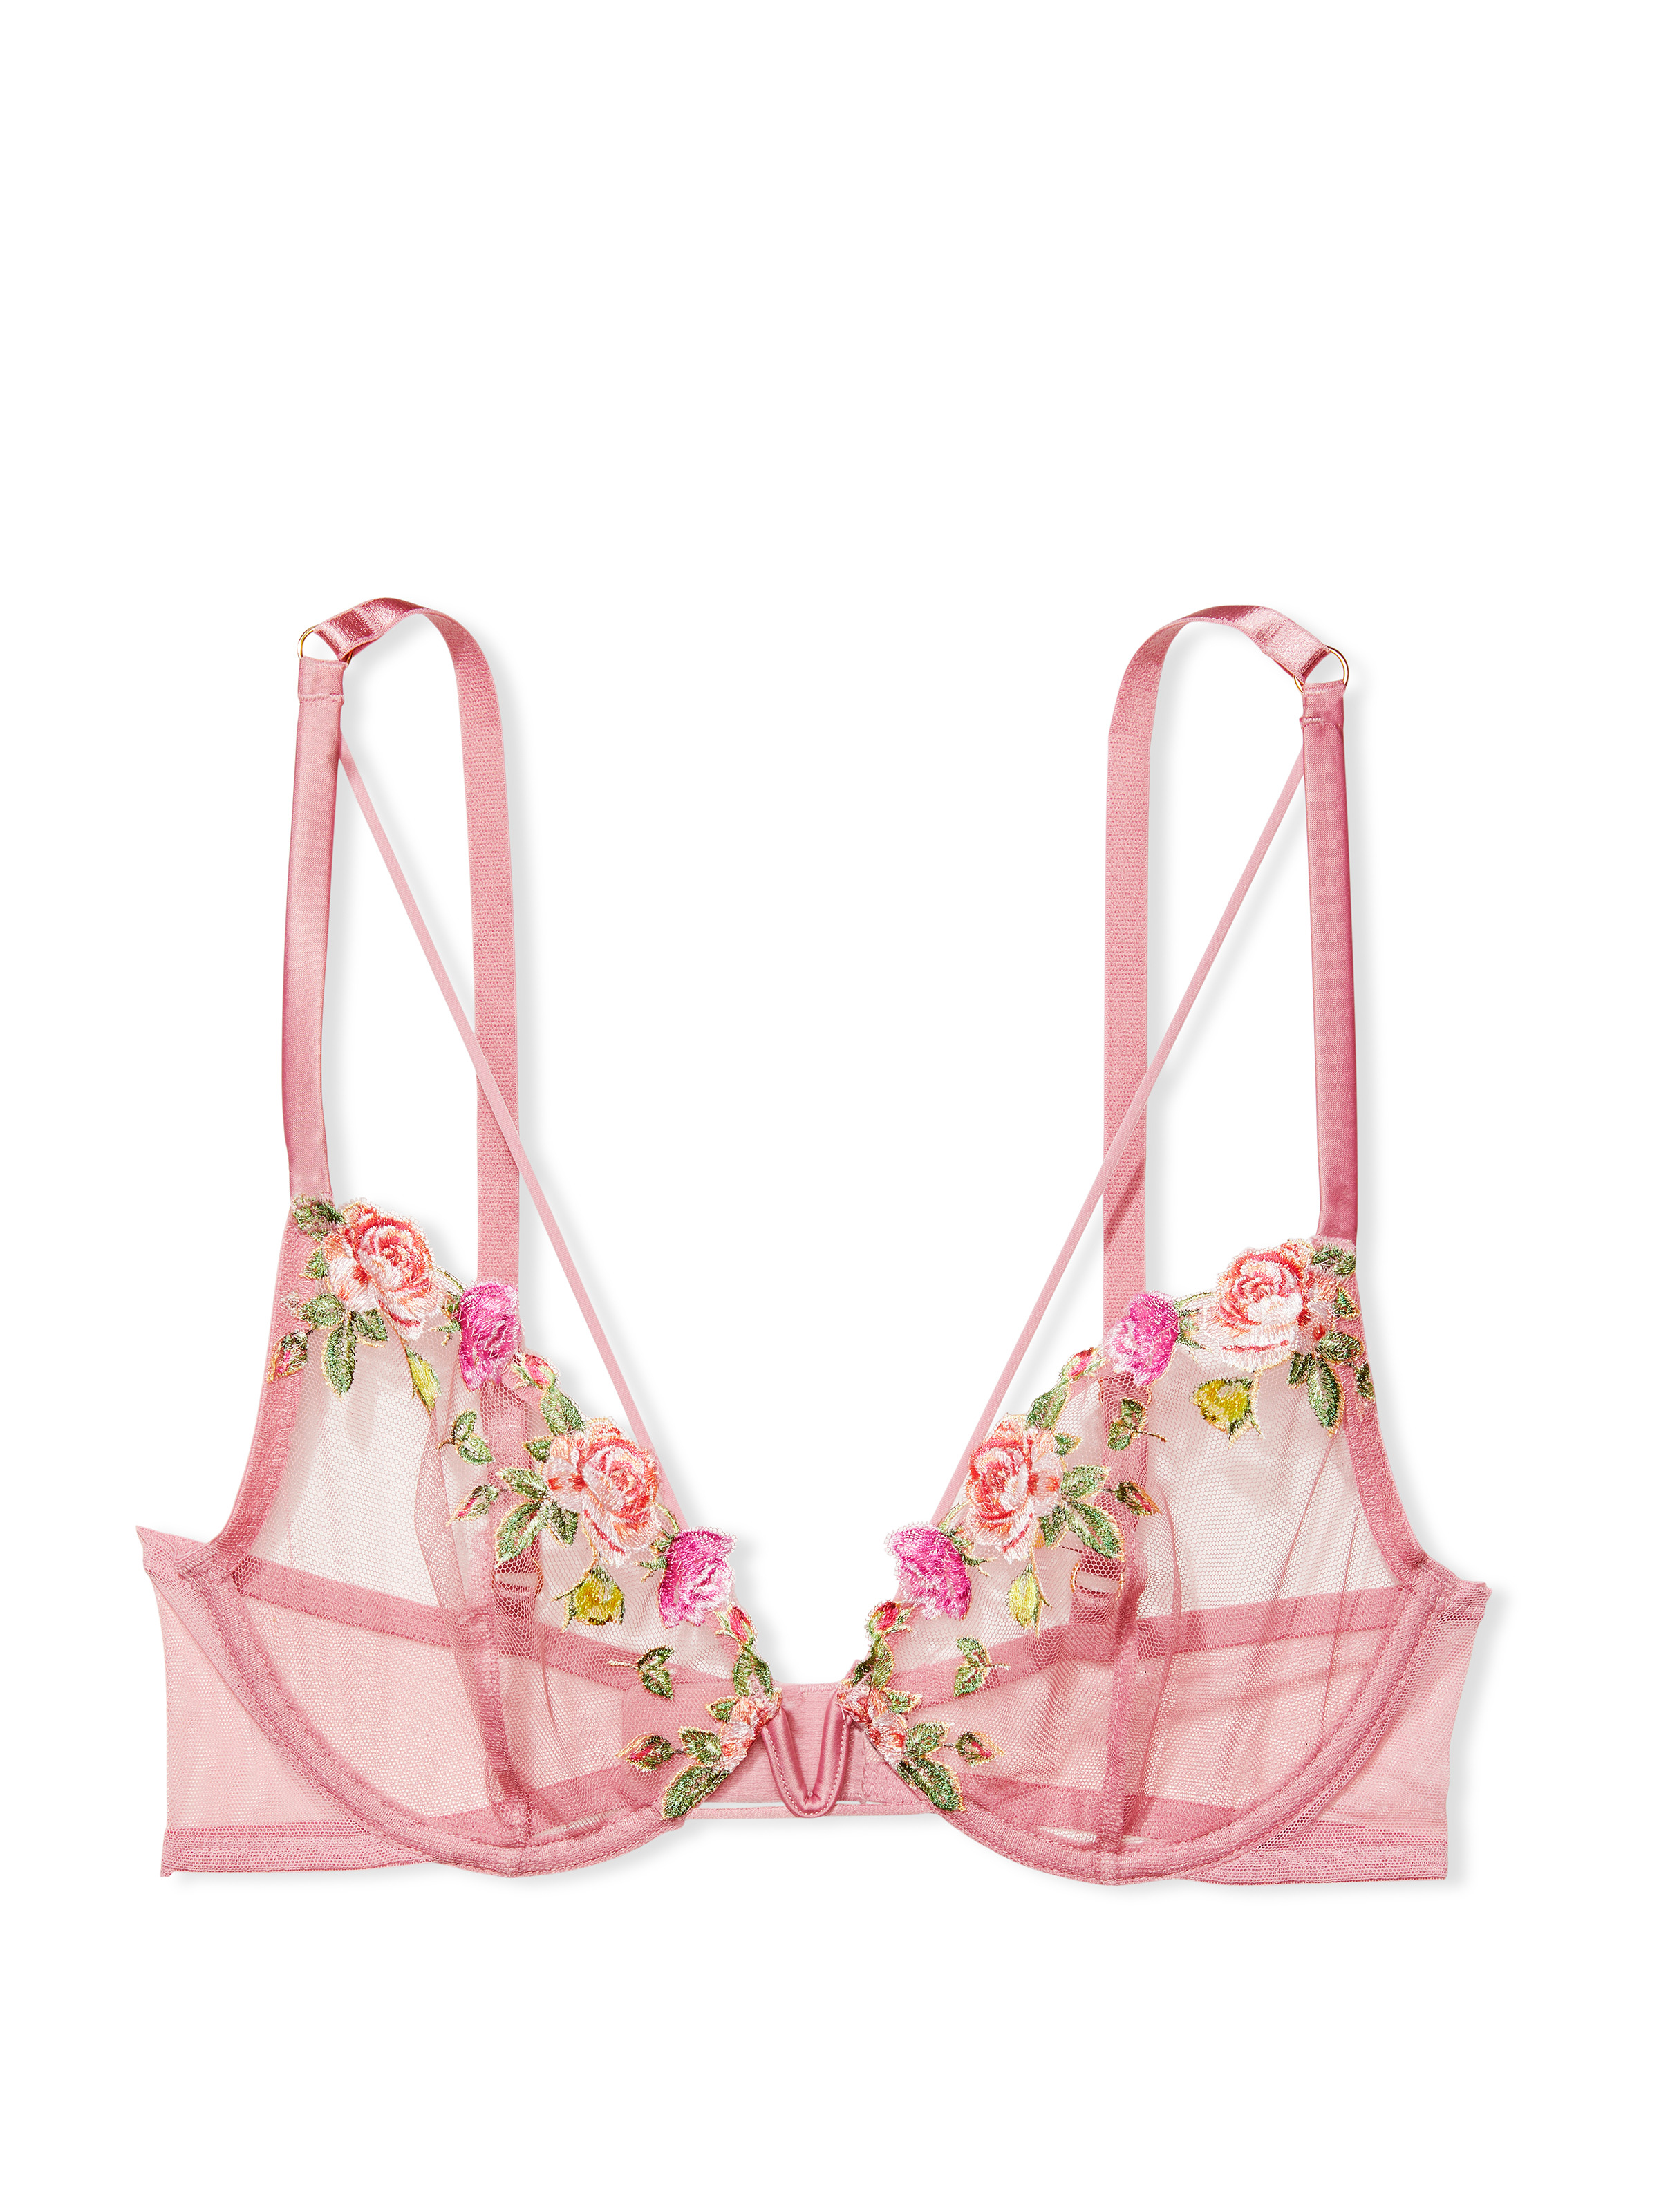 PINK Victoria's Secret, Intimates & Sleepwear, Victorias Secret Pink  Unlined Fishnet Bralette